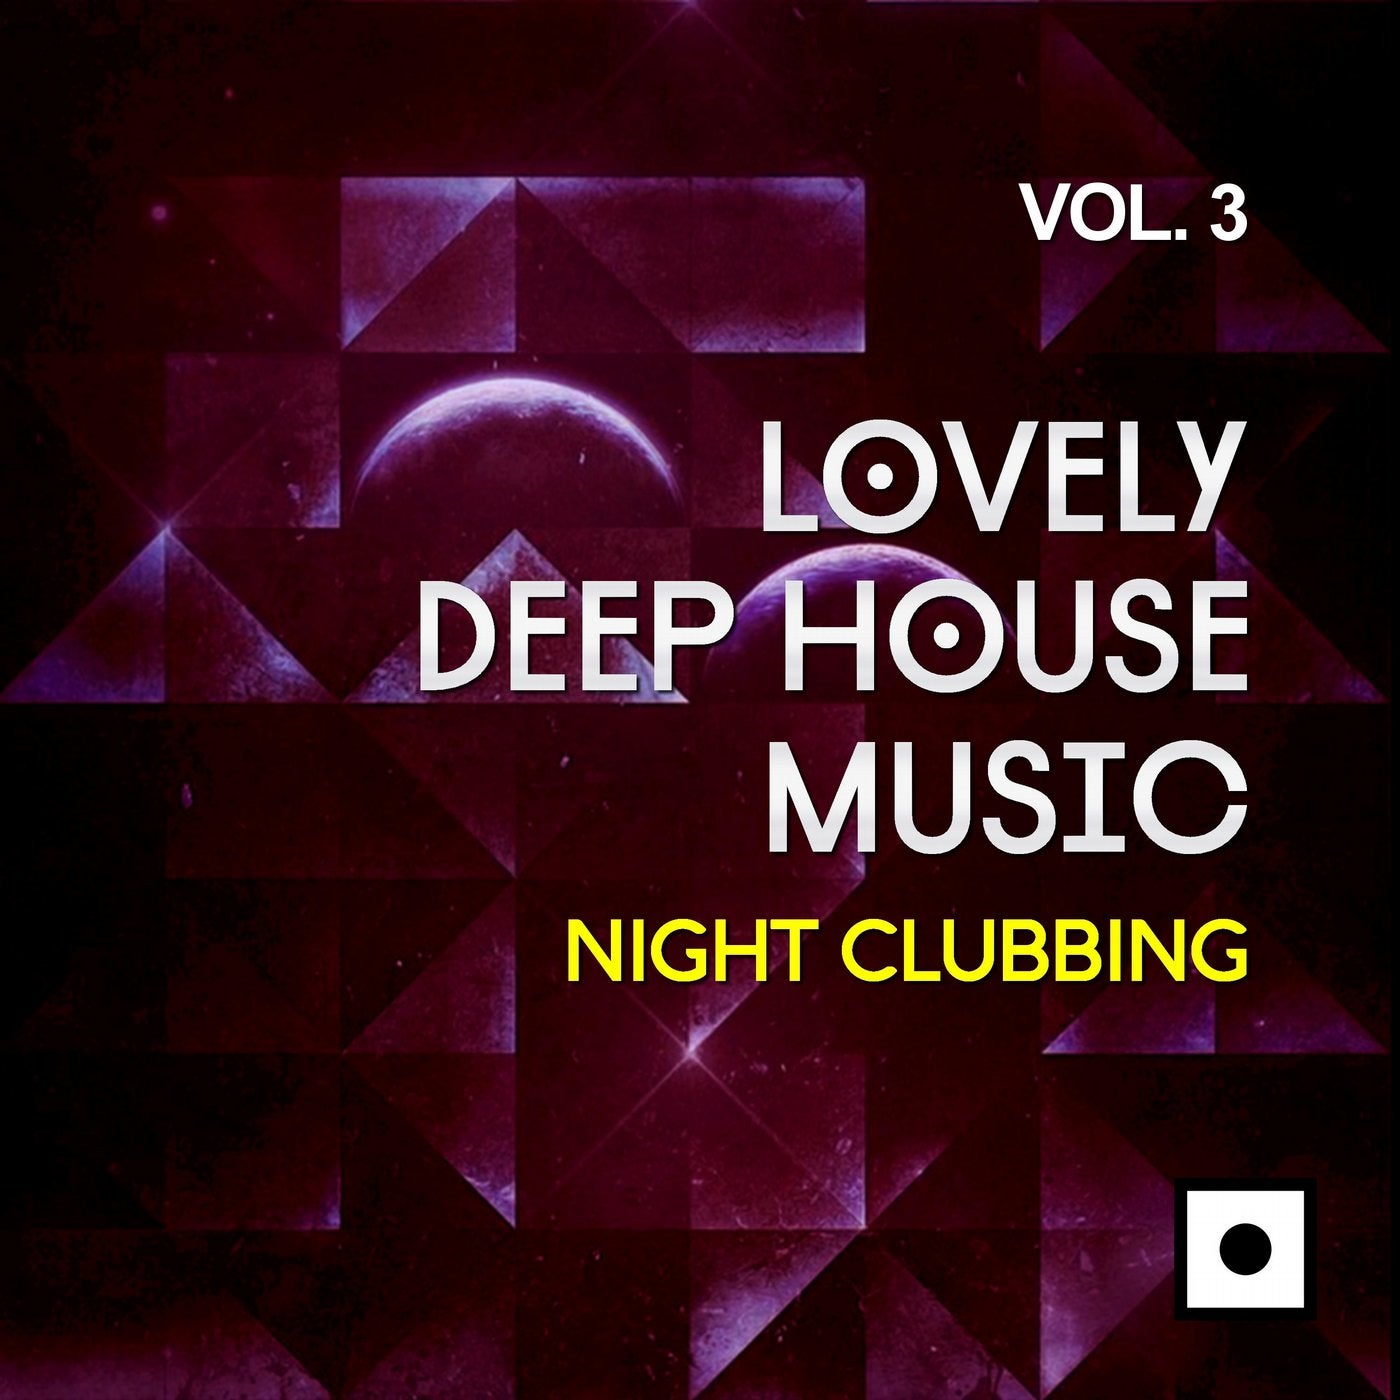 Lovely Deep House Music, Vol. 3 (Night Clubbing)